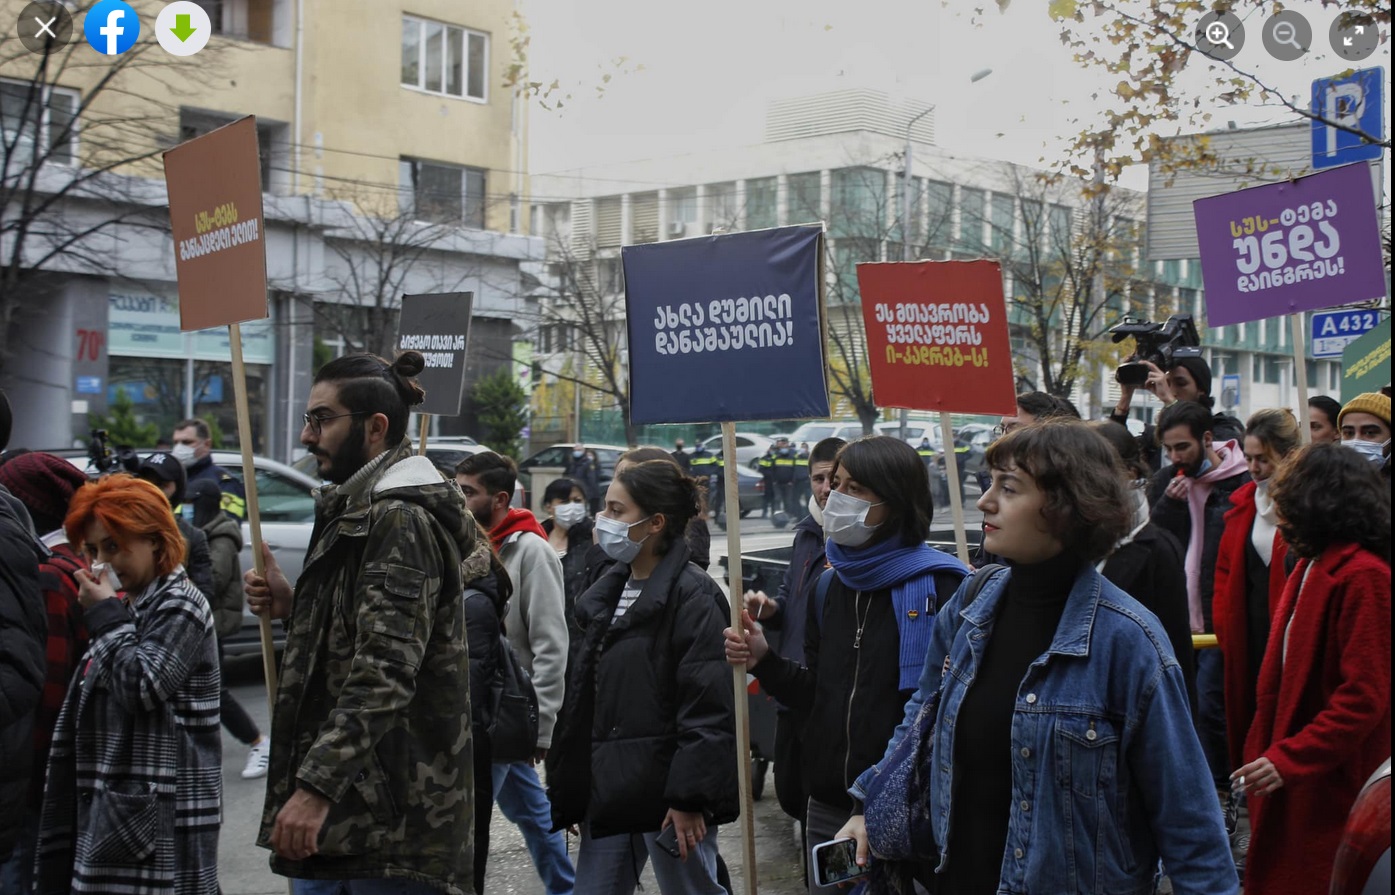 Тбилиси. Протестующие идут к зданию СГБ. 30.11.2021 г